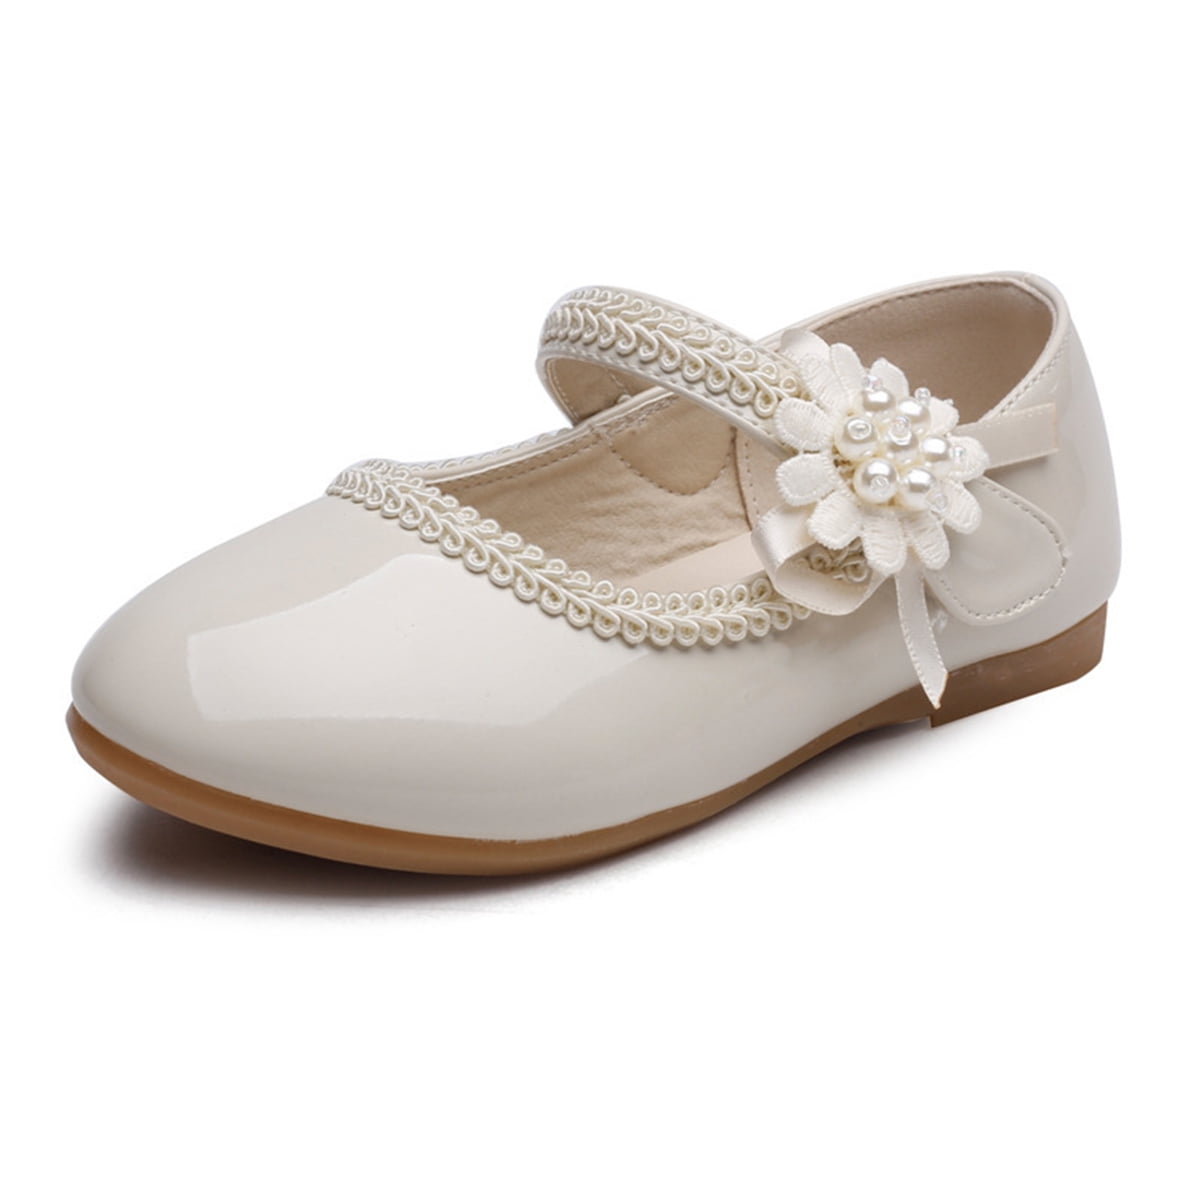 Chiximaxu Little Girls Outdoor Slip on Loafer Casual School Dress Flat Shoes 